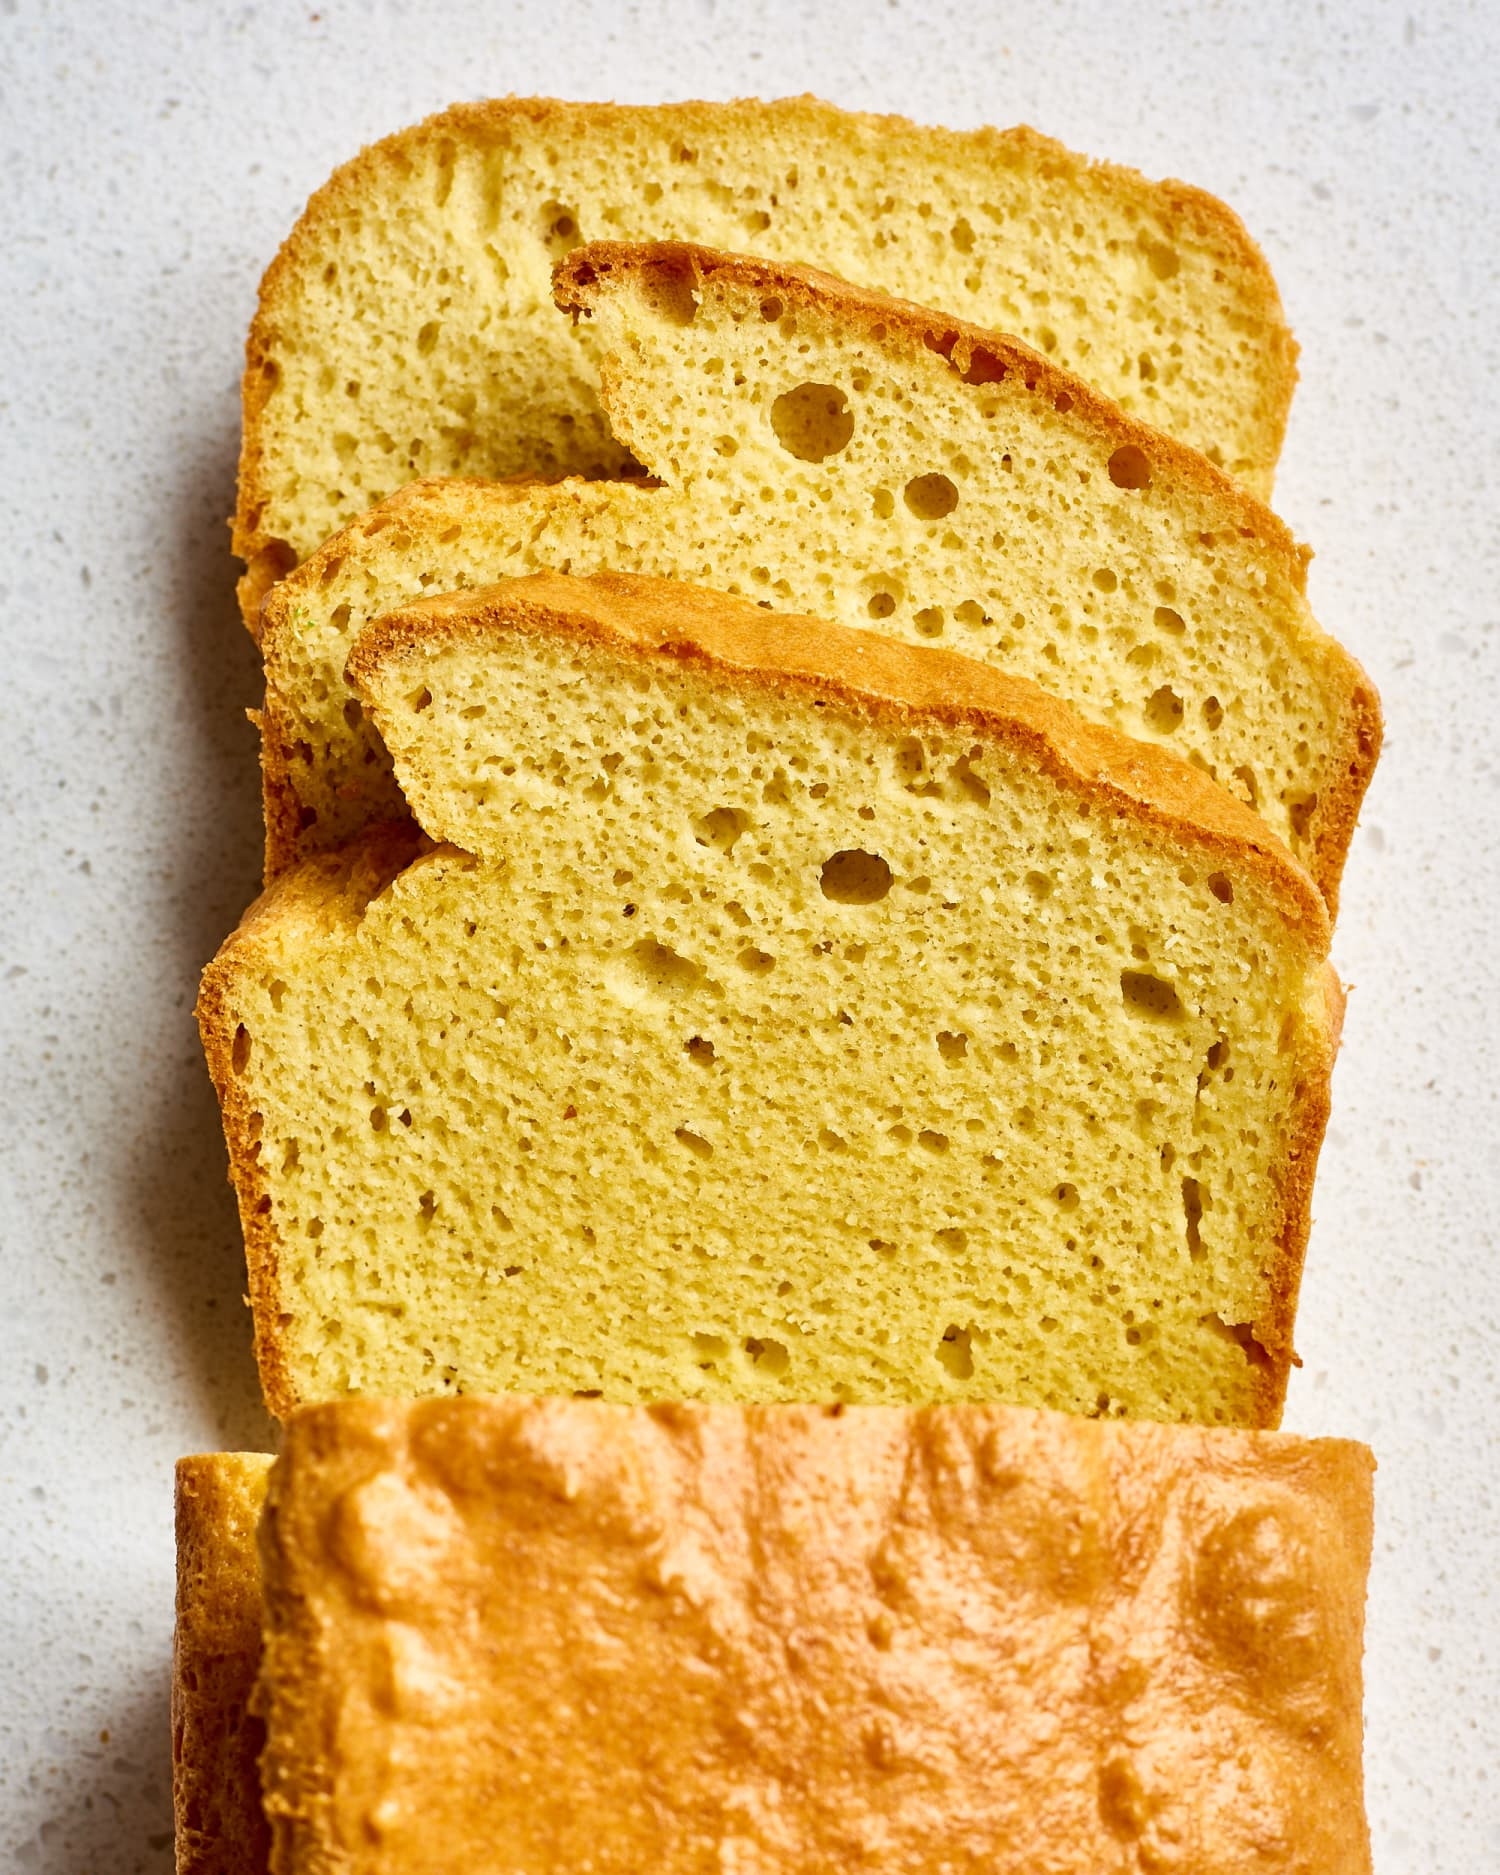 Keto Bread Loaf
 Keto Bread Loaf Recipe Review